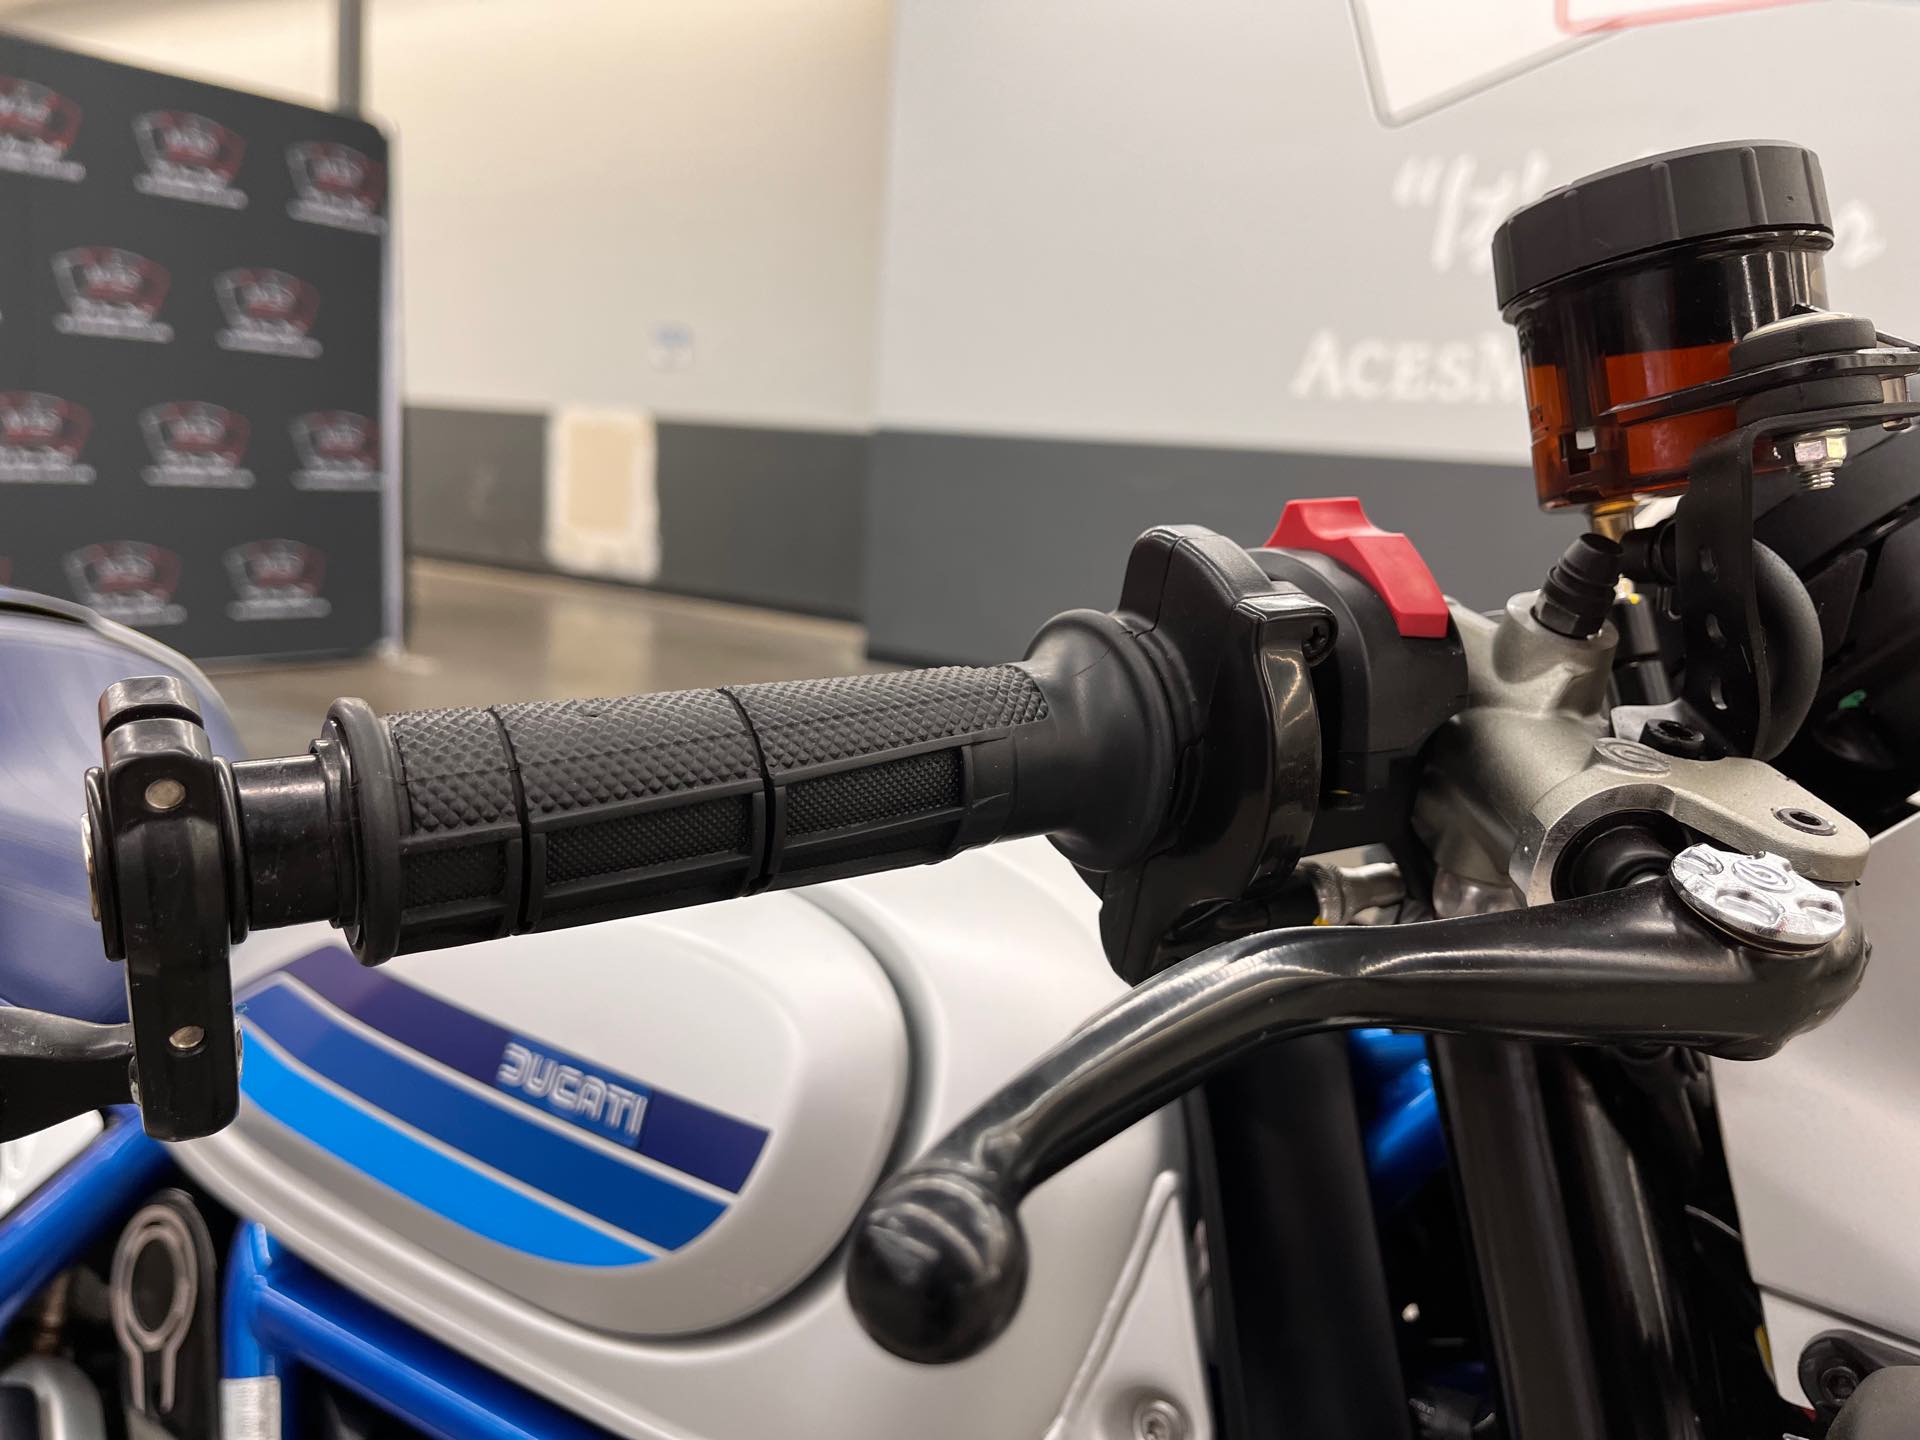 2020 Ducati Scrambler Cafe Racer at Aces Motorcycles - Denver